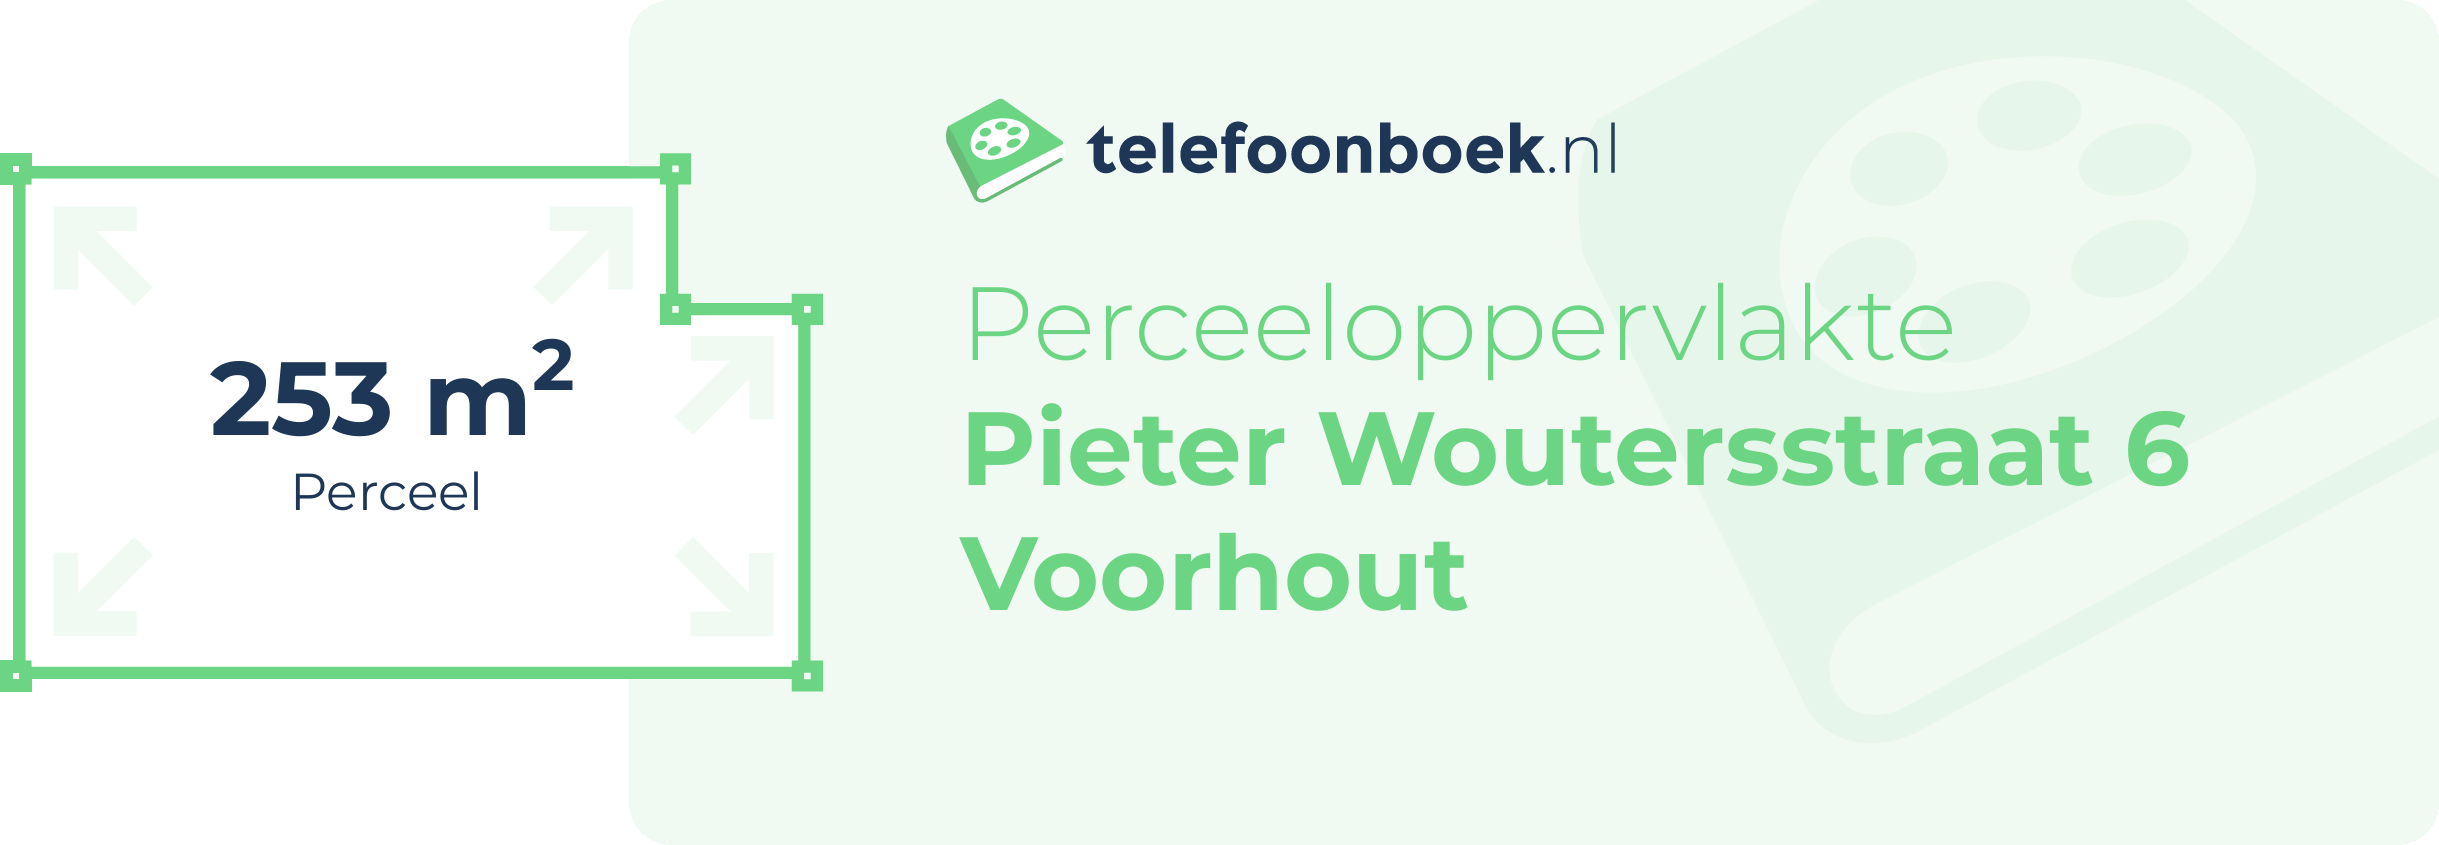 Perceeloppervlakte Pieter Woutersstraat 6 Voorhout